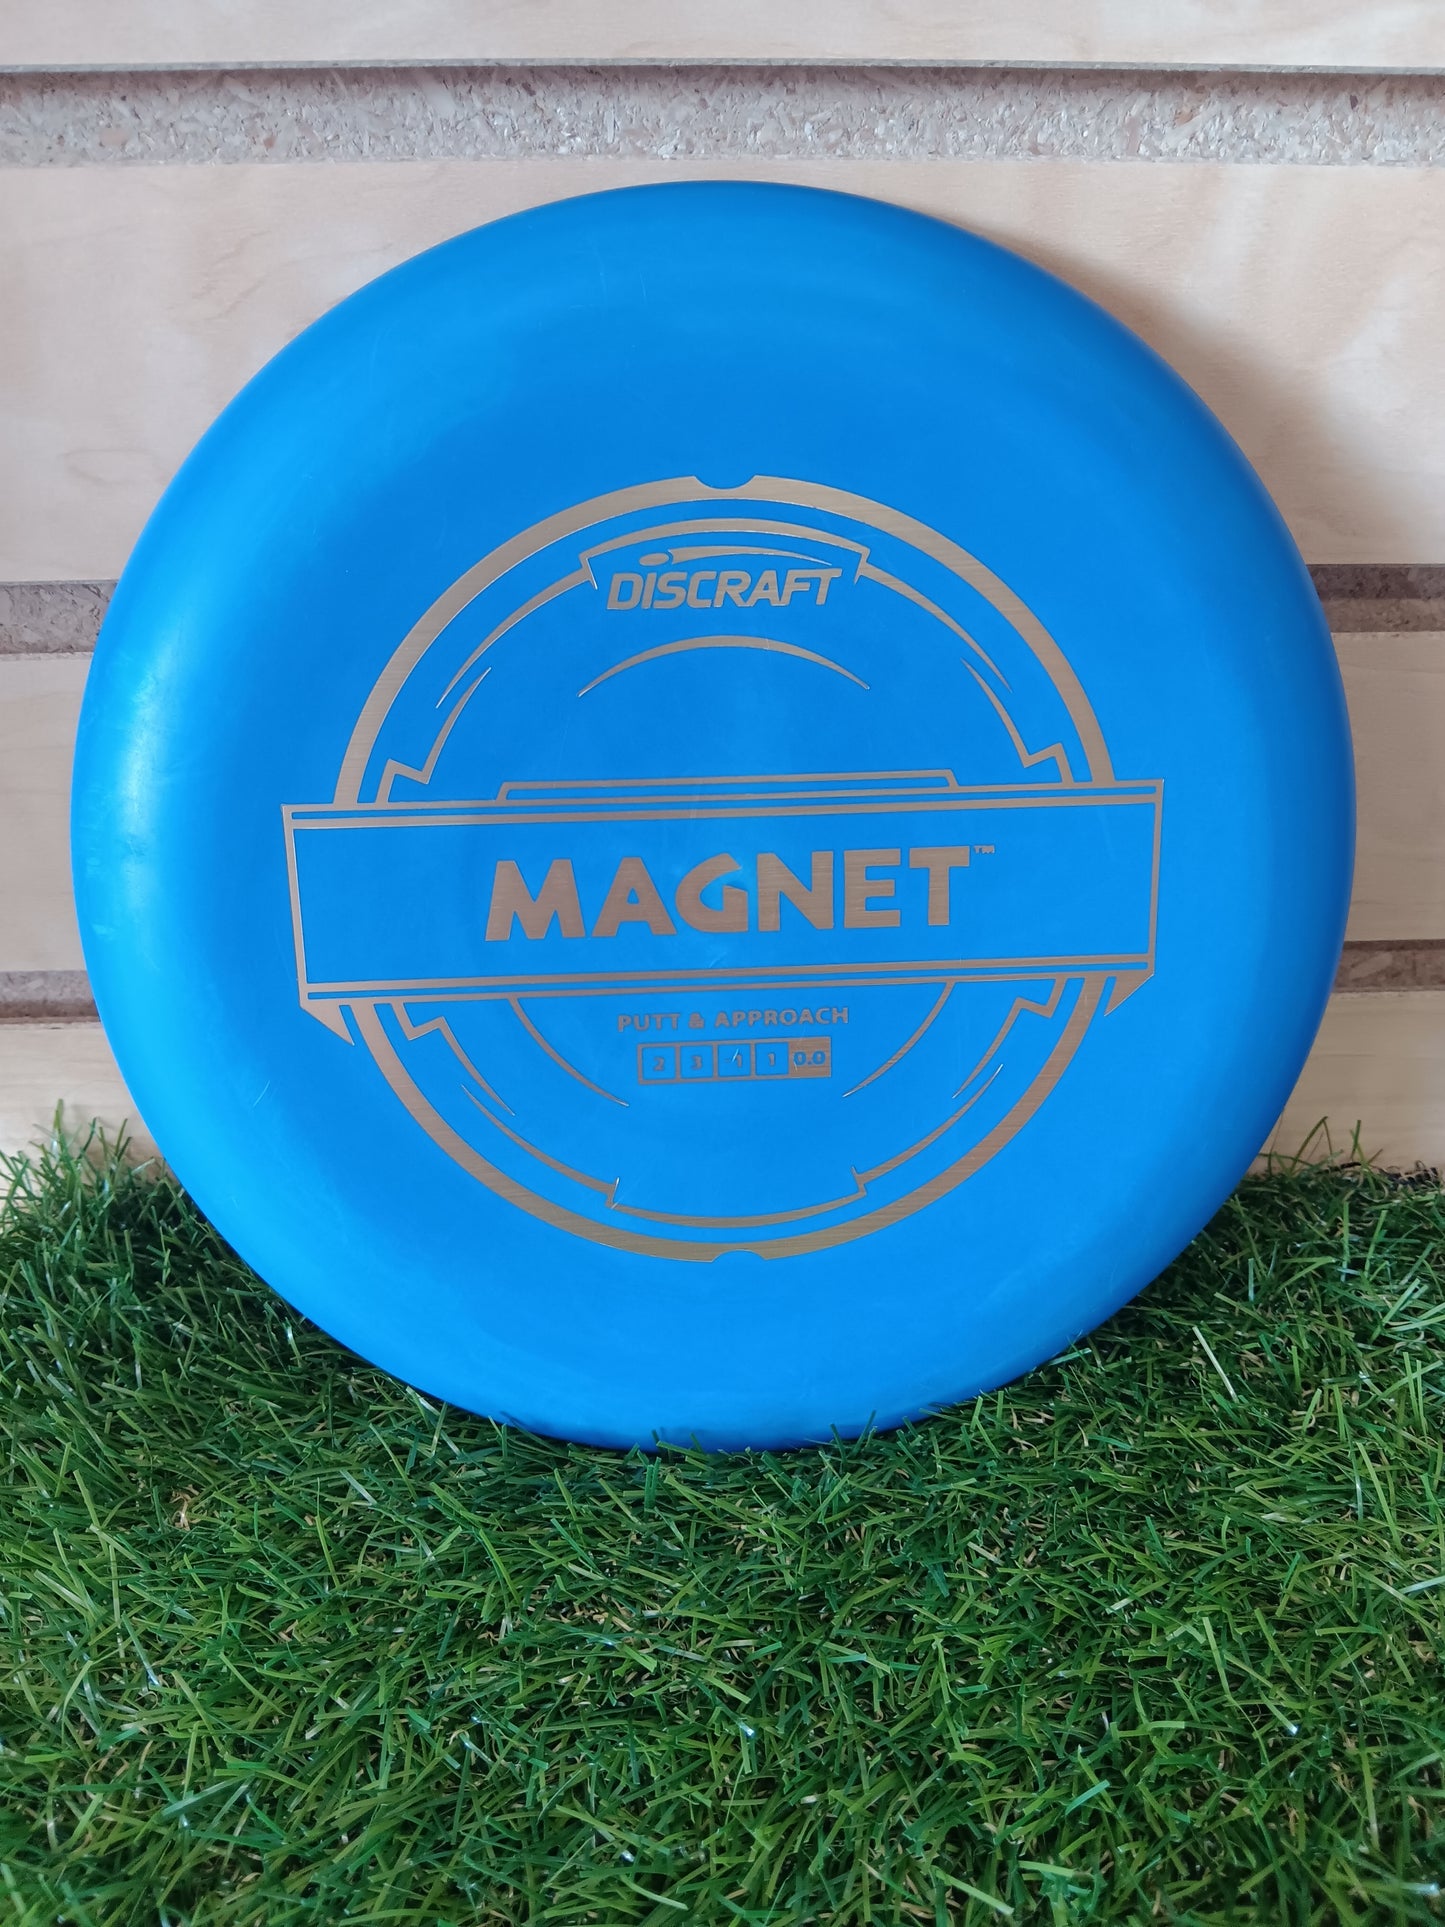 Discraft Magnet - DiscIn